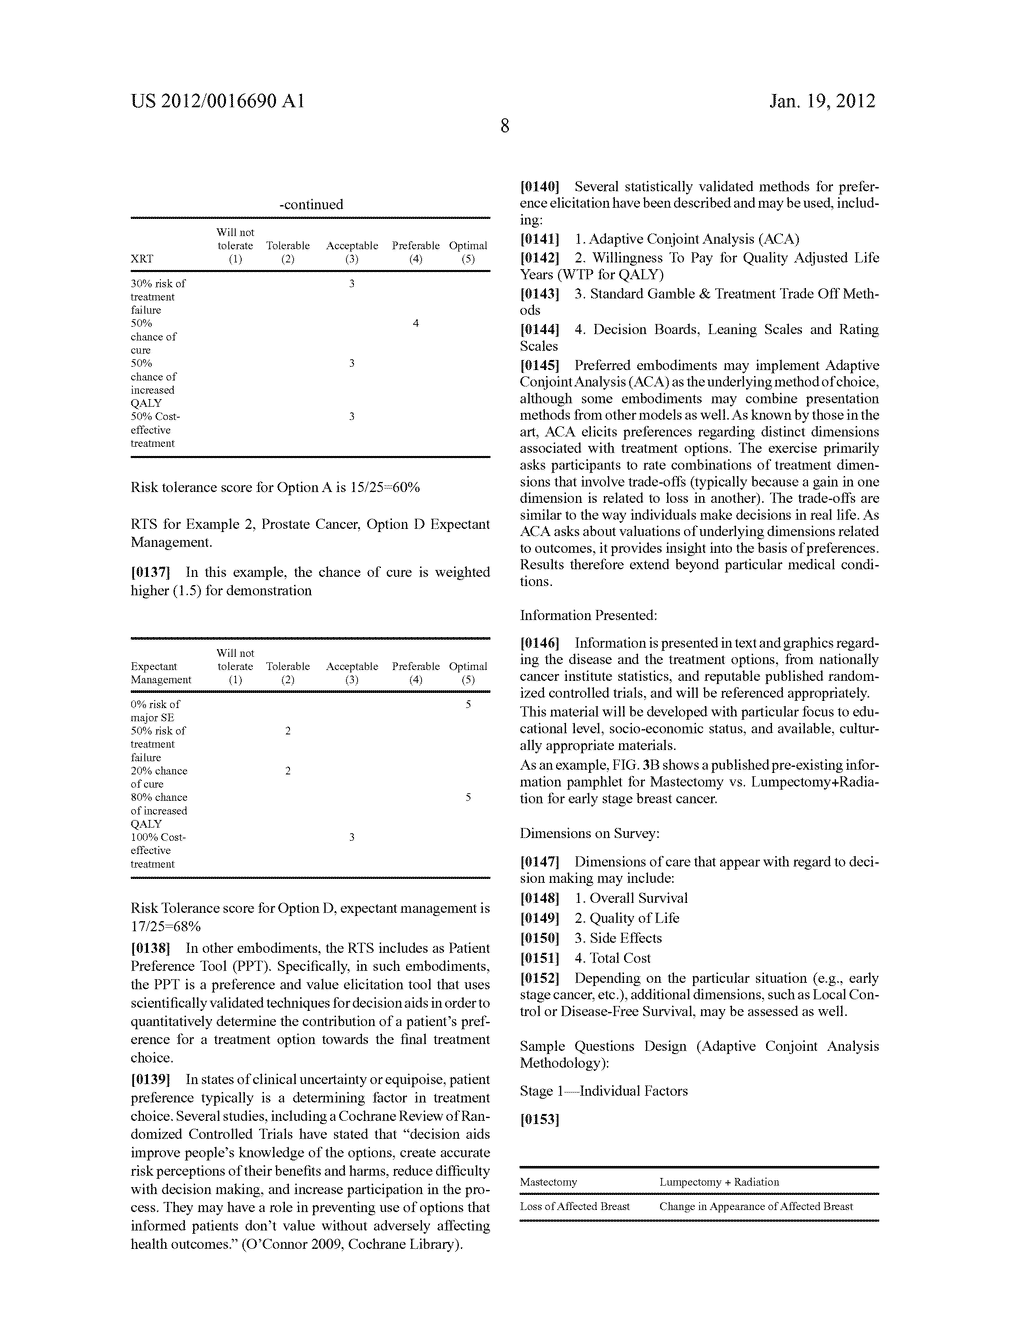 TREATMENT RELATED QUANTITATIVE DECISION ENGINE - diagram, schematic, and image 13